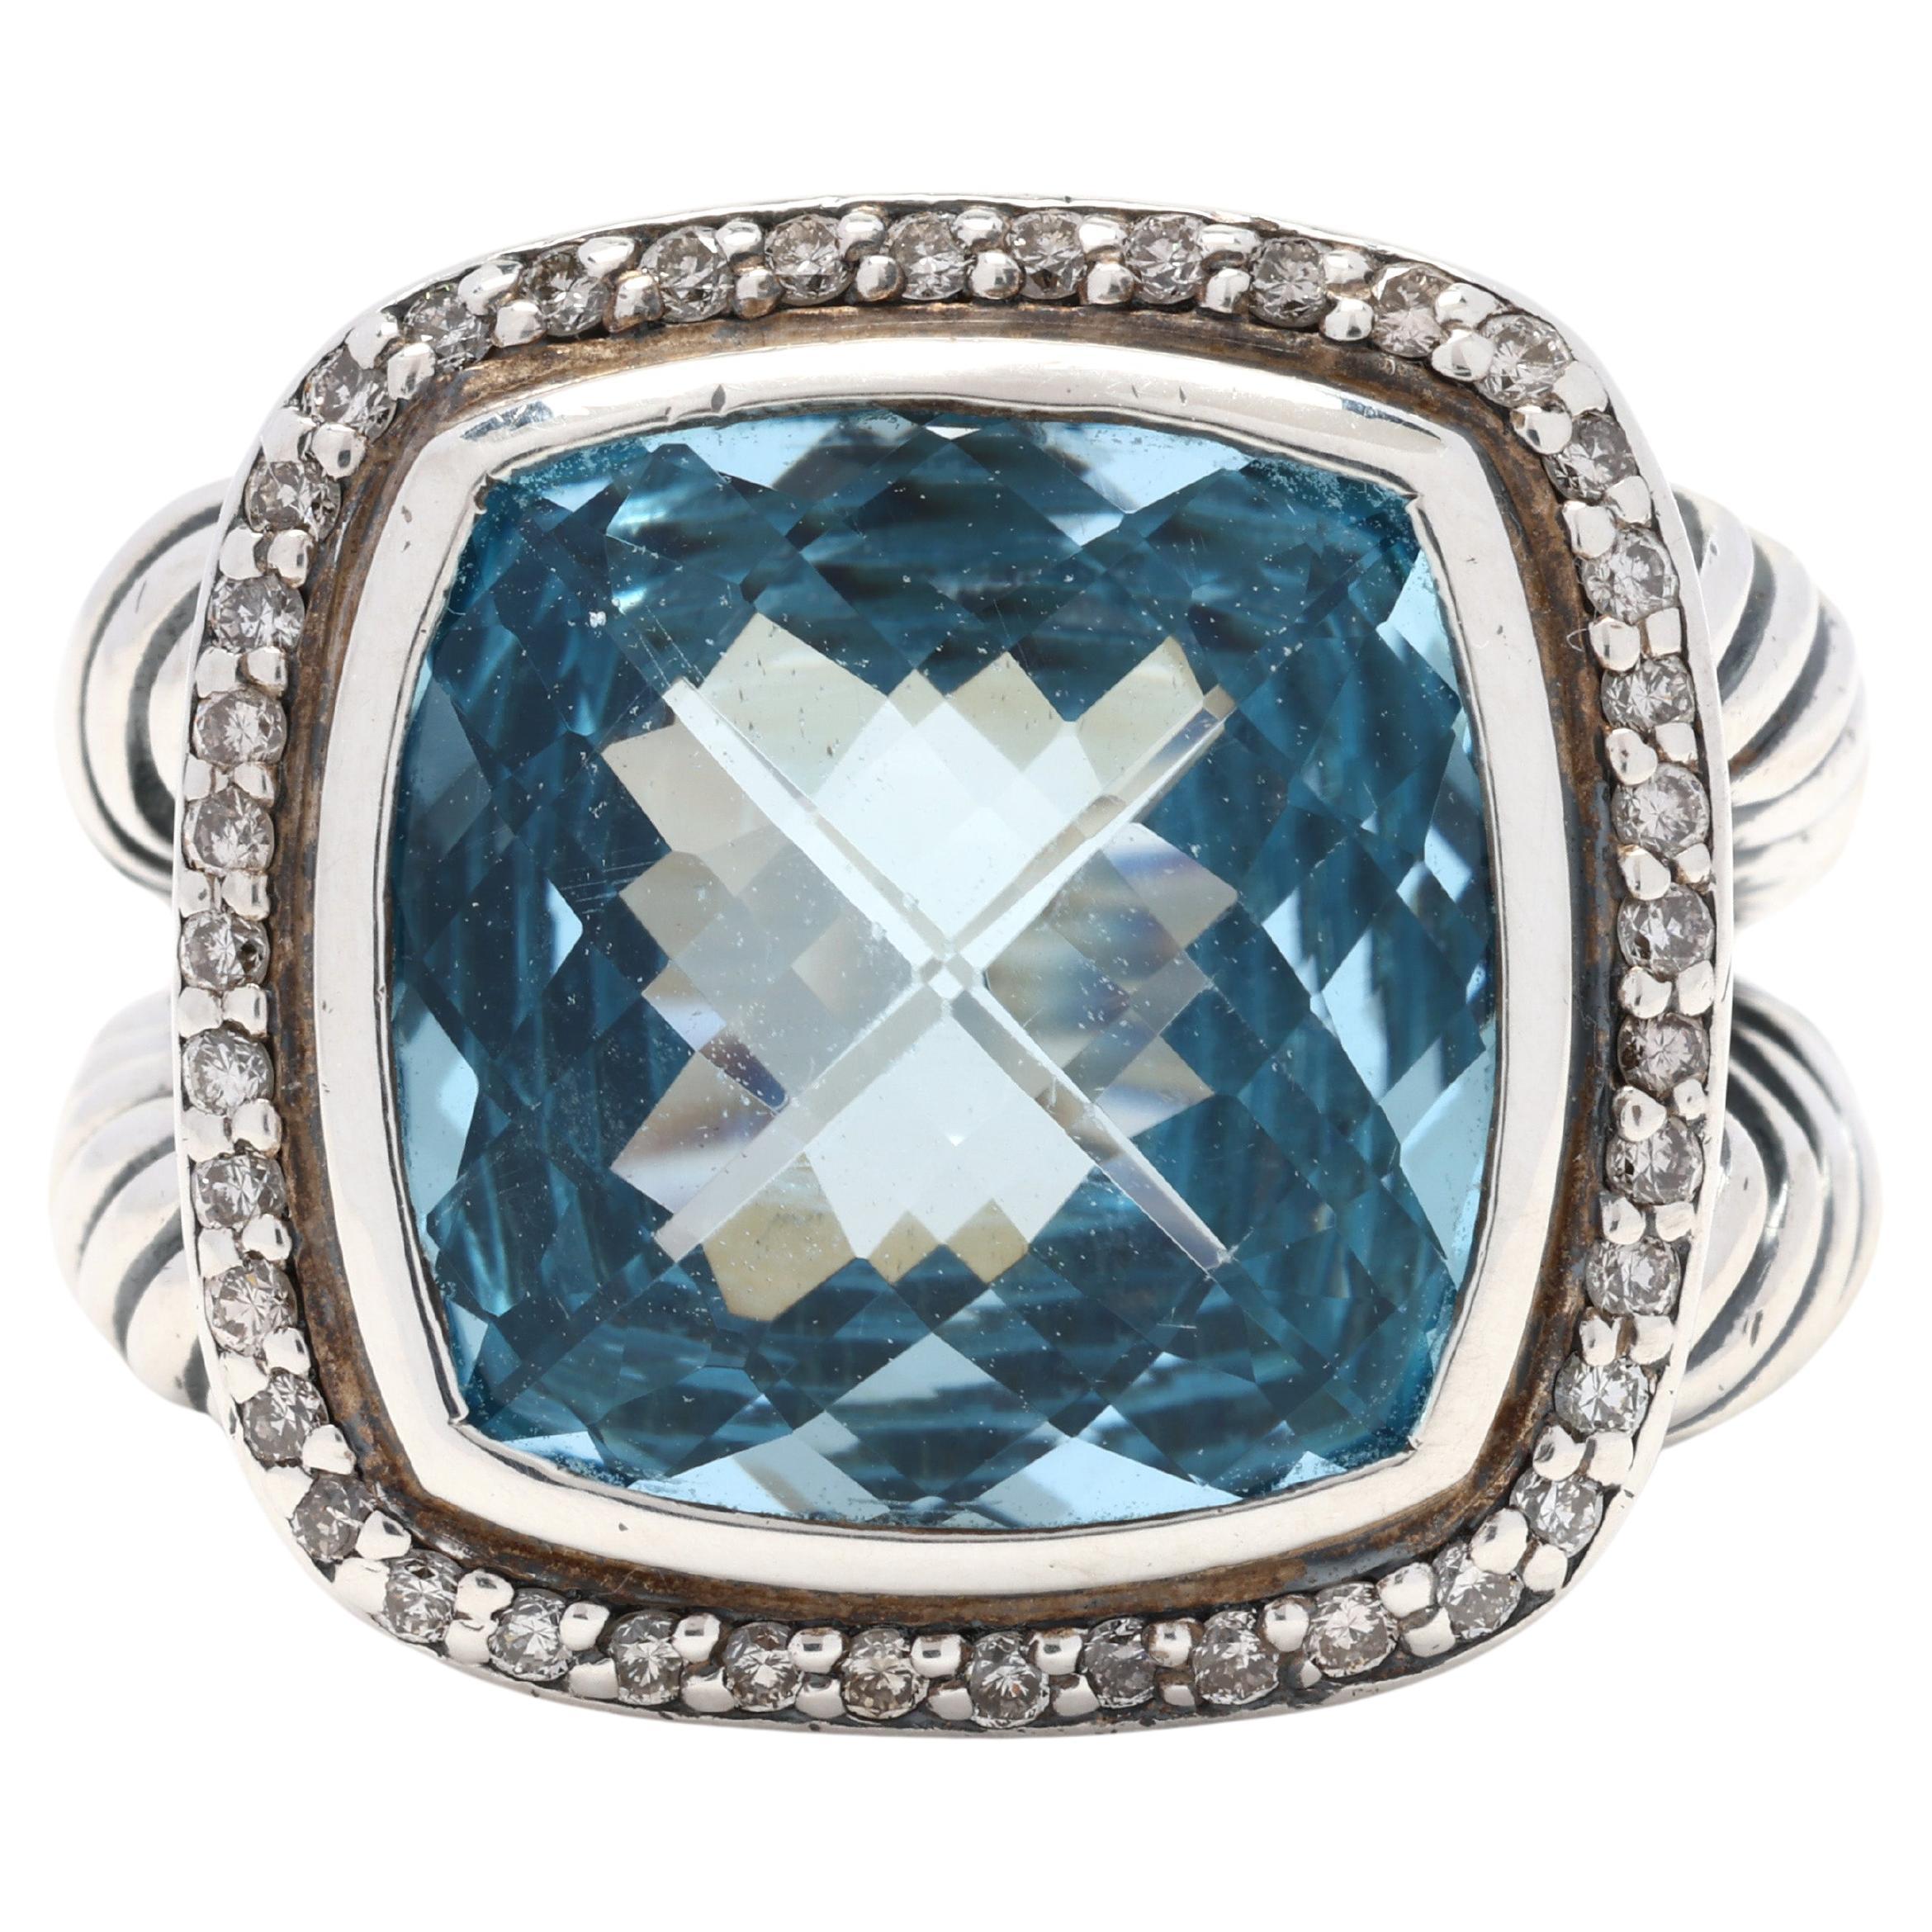 David Yurman 13.85ctw Blue Topaz and Diamond Ring, SterlingSilver 18k White Gold